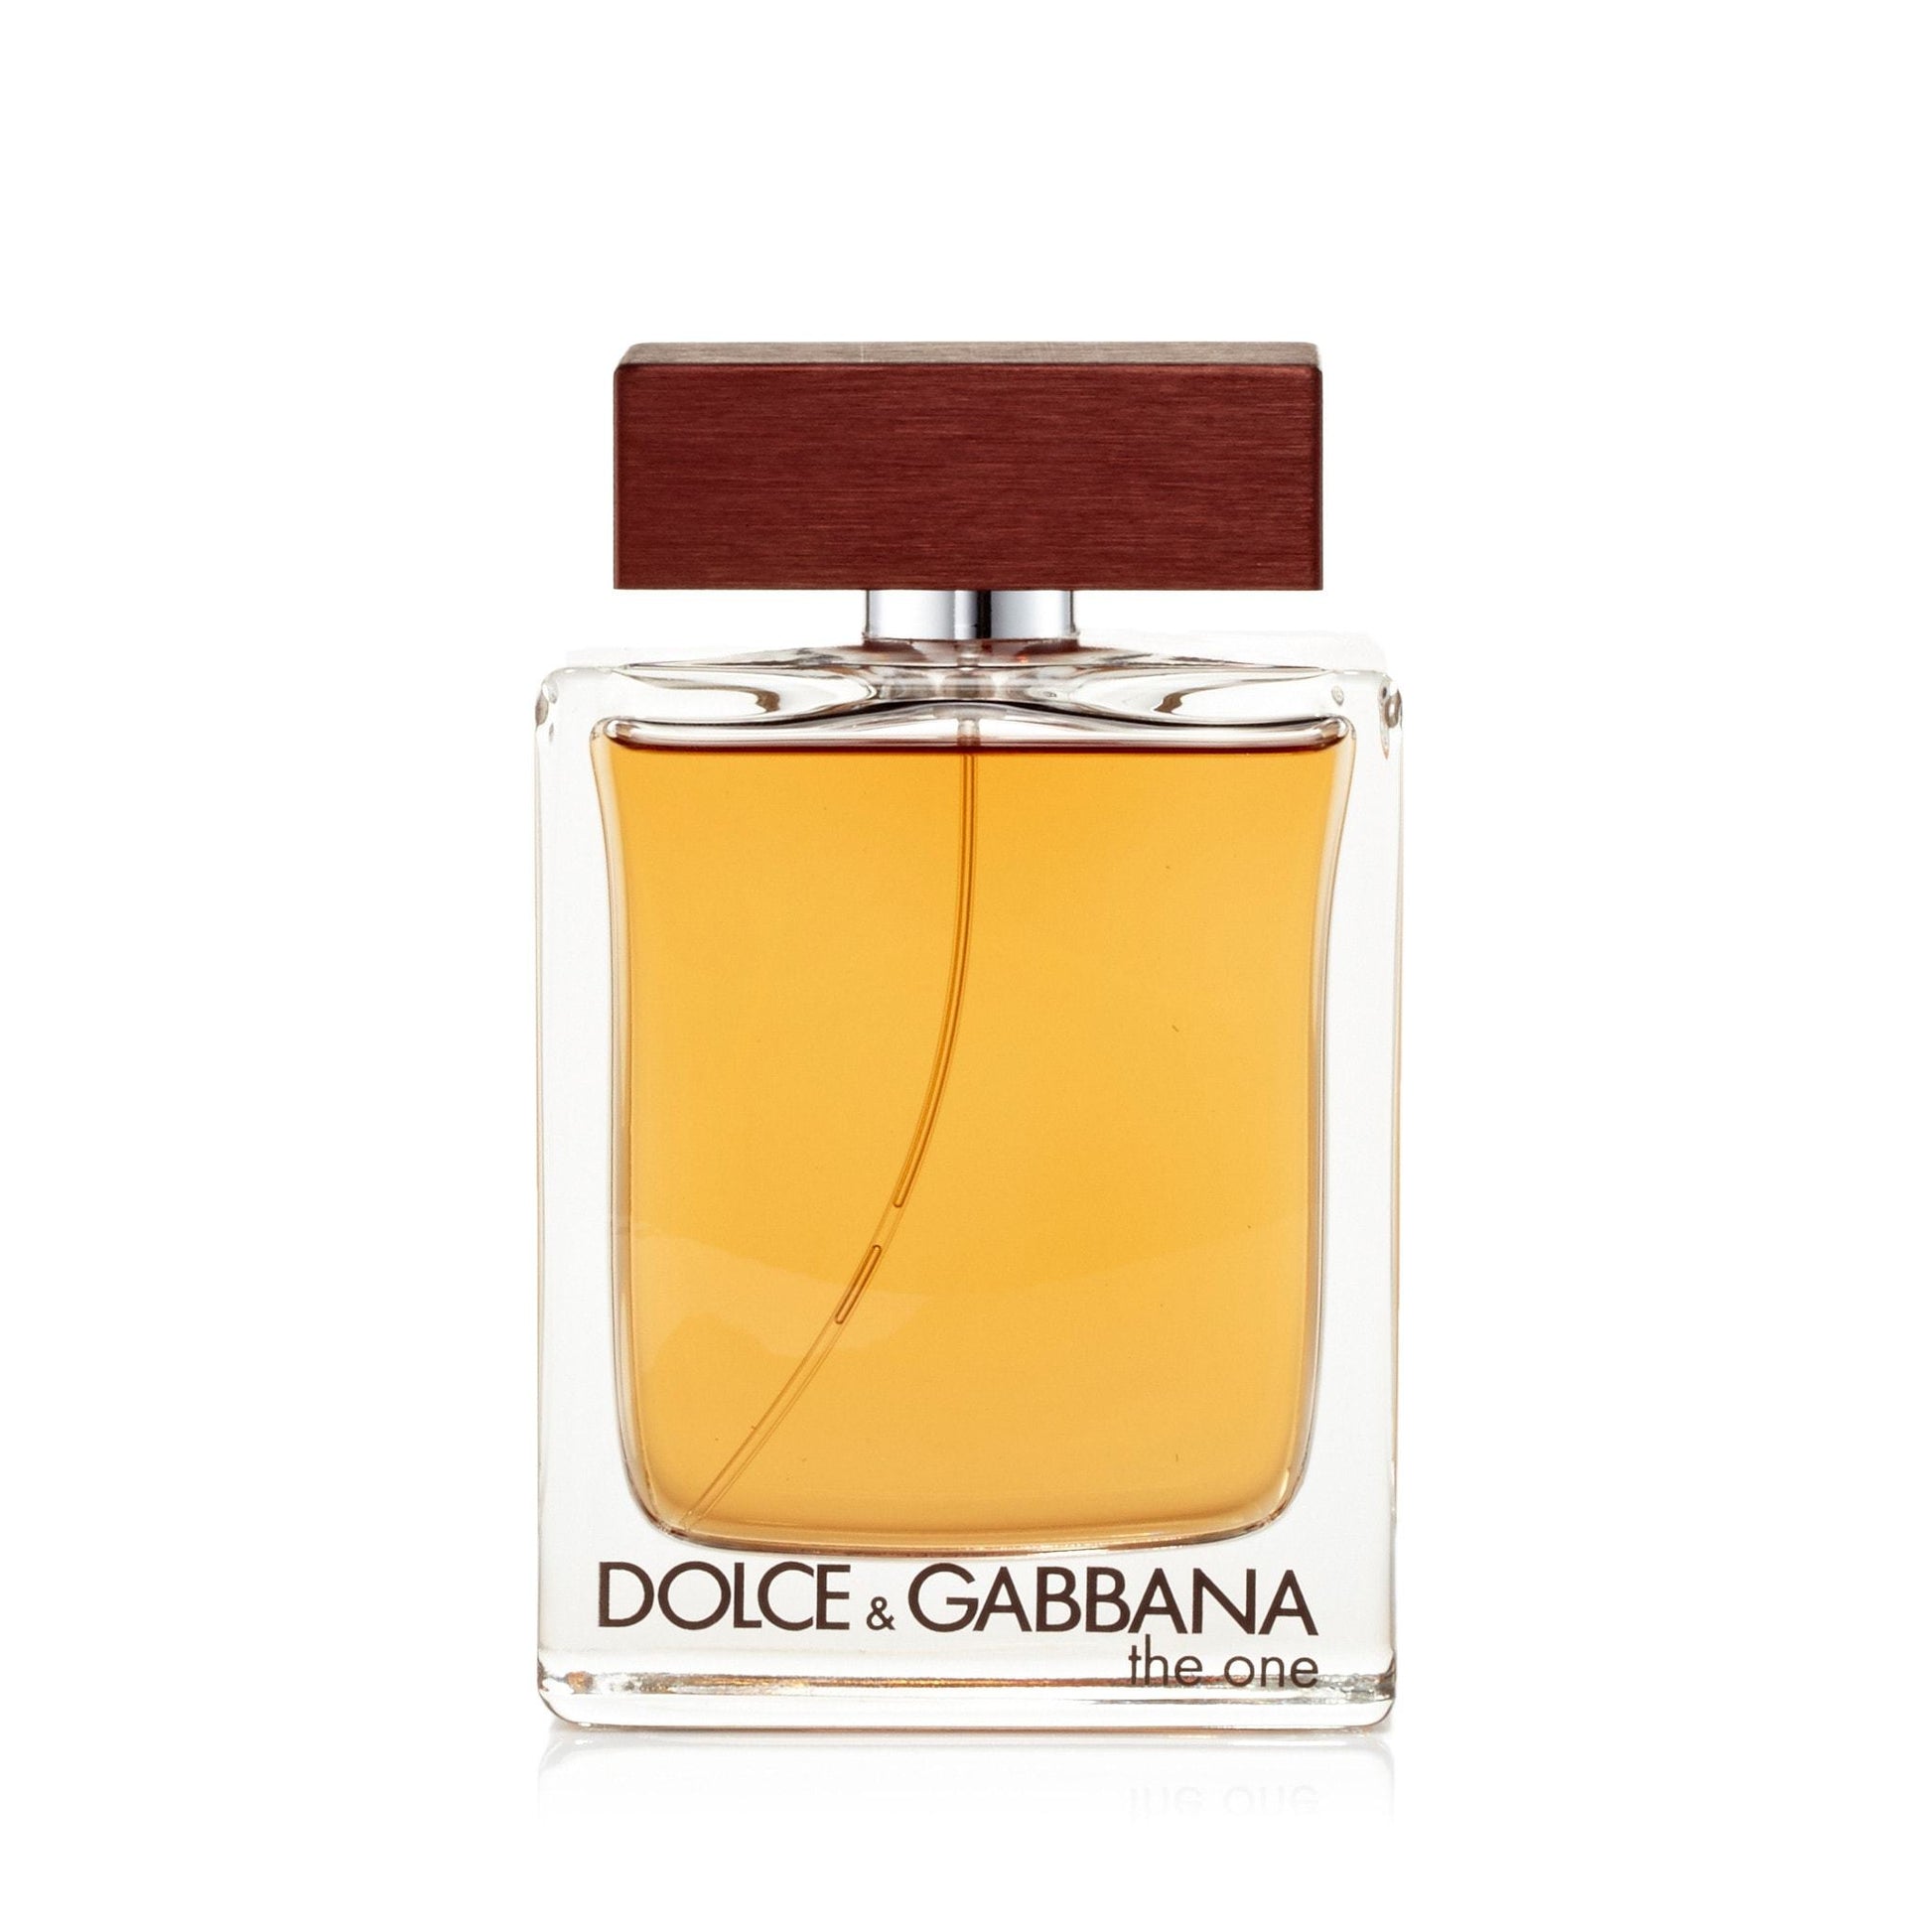 The One Eau de Toilette Spray for Men by Dolce & Gabbana, Product image 4